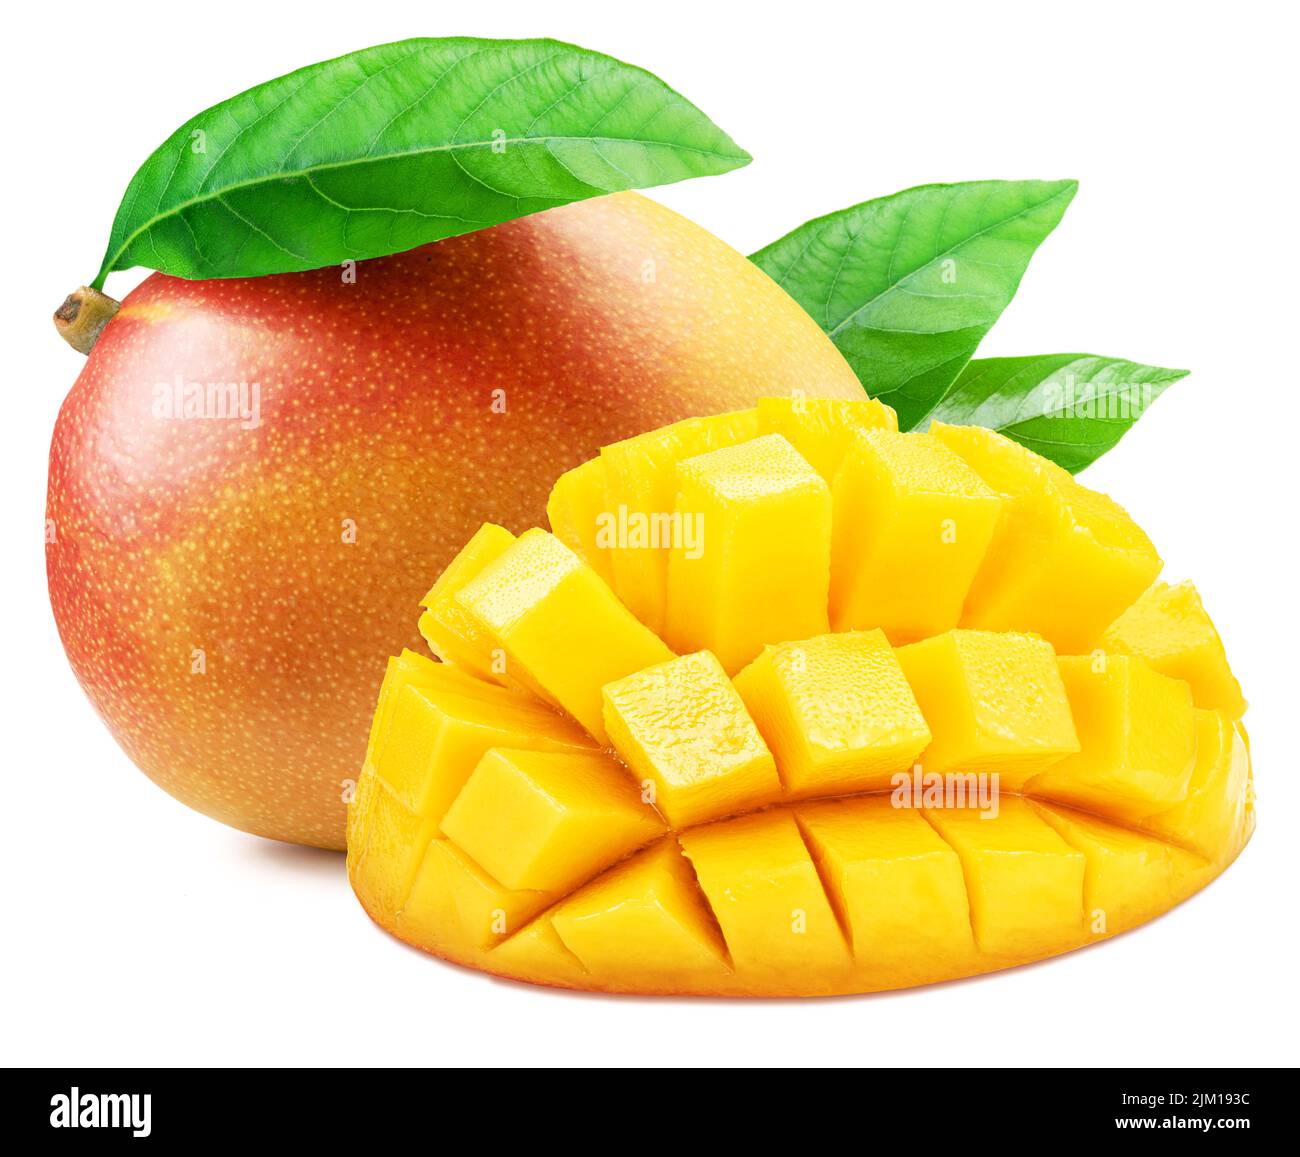 Mango fruit with green leaf and mango cut in hedgehog style isolated on white background. Stock Photo